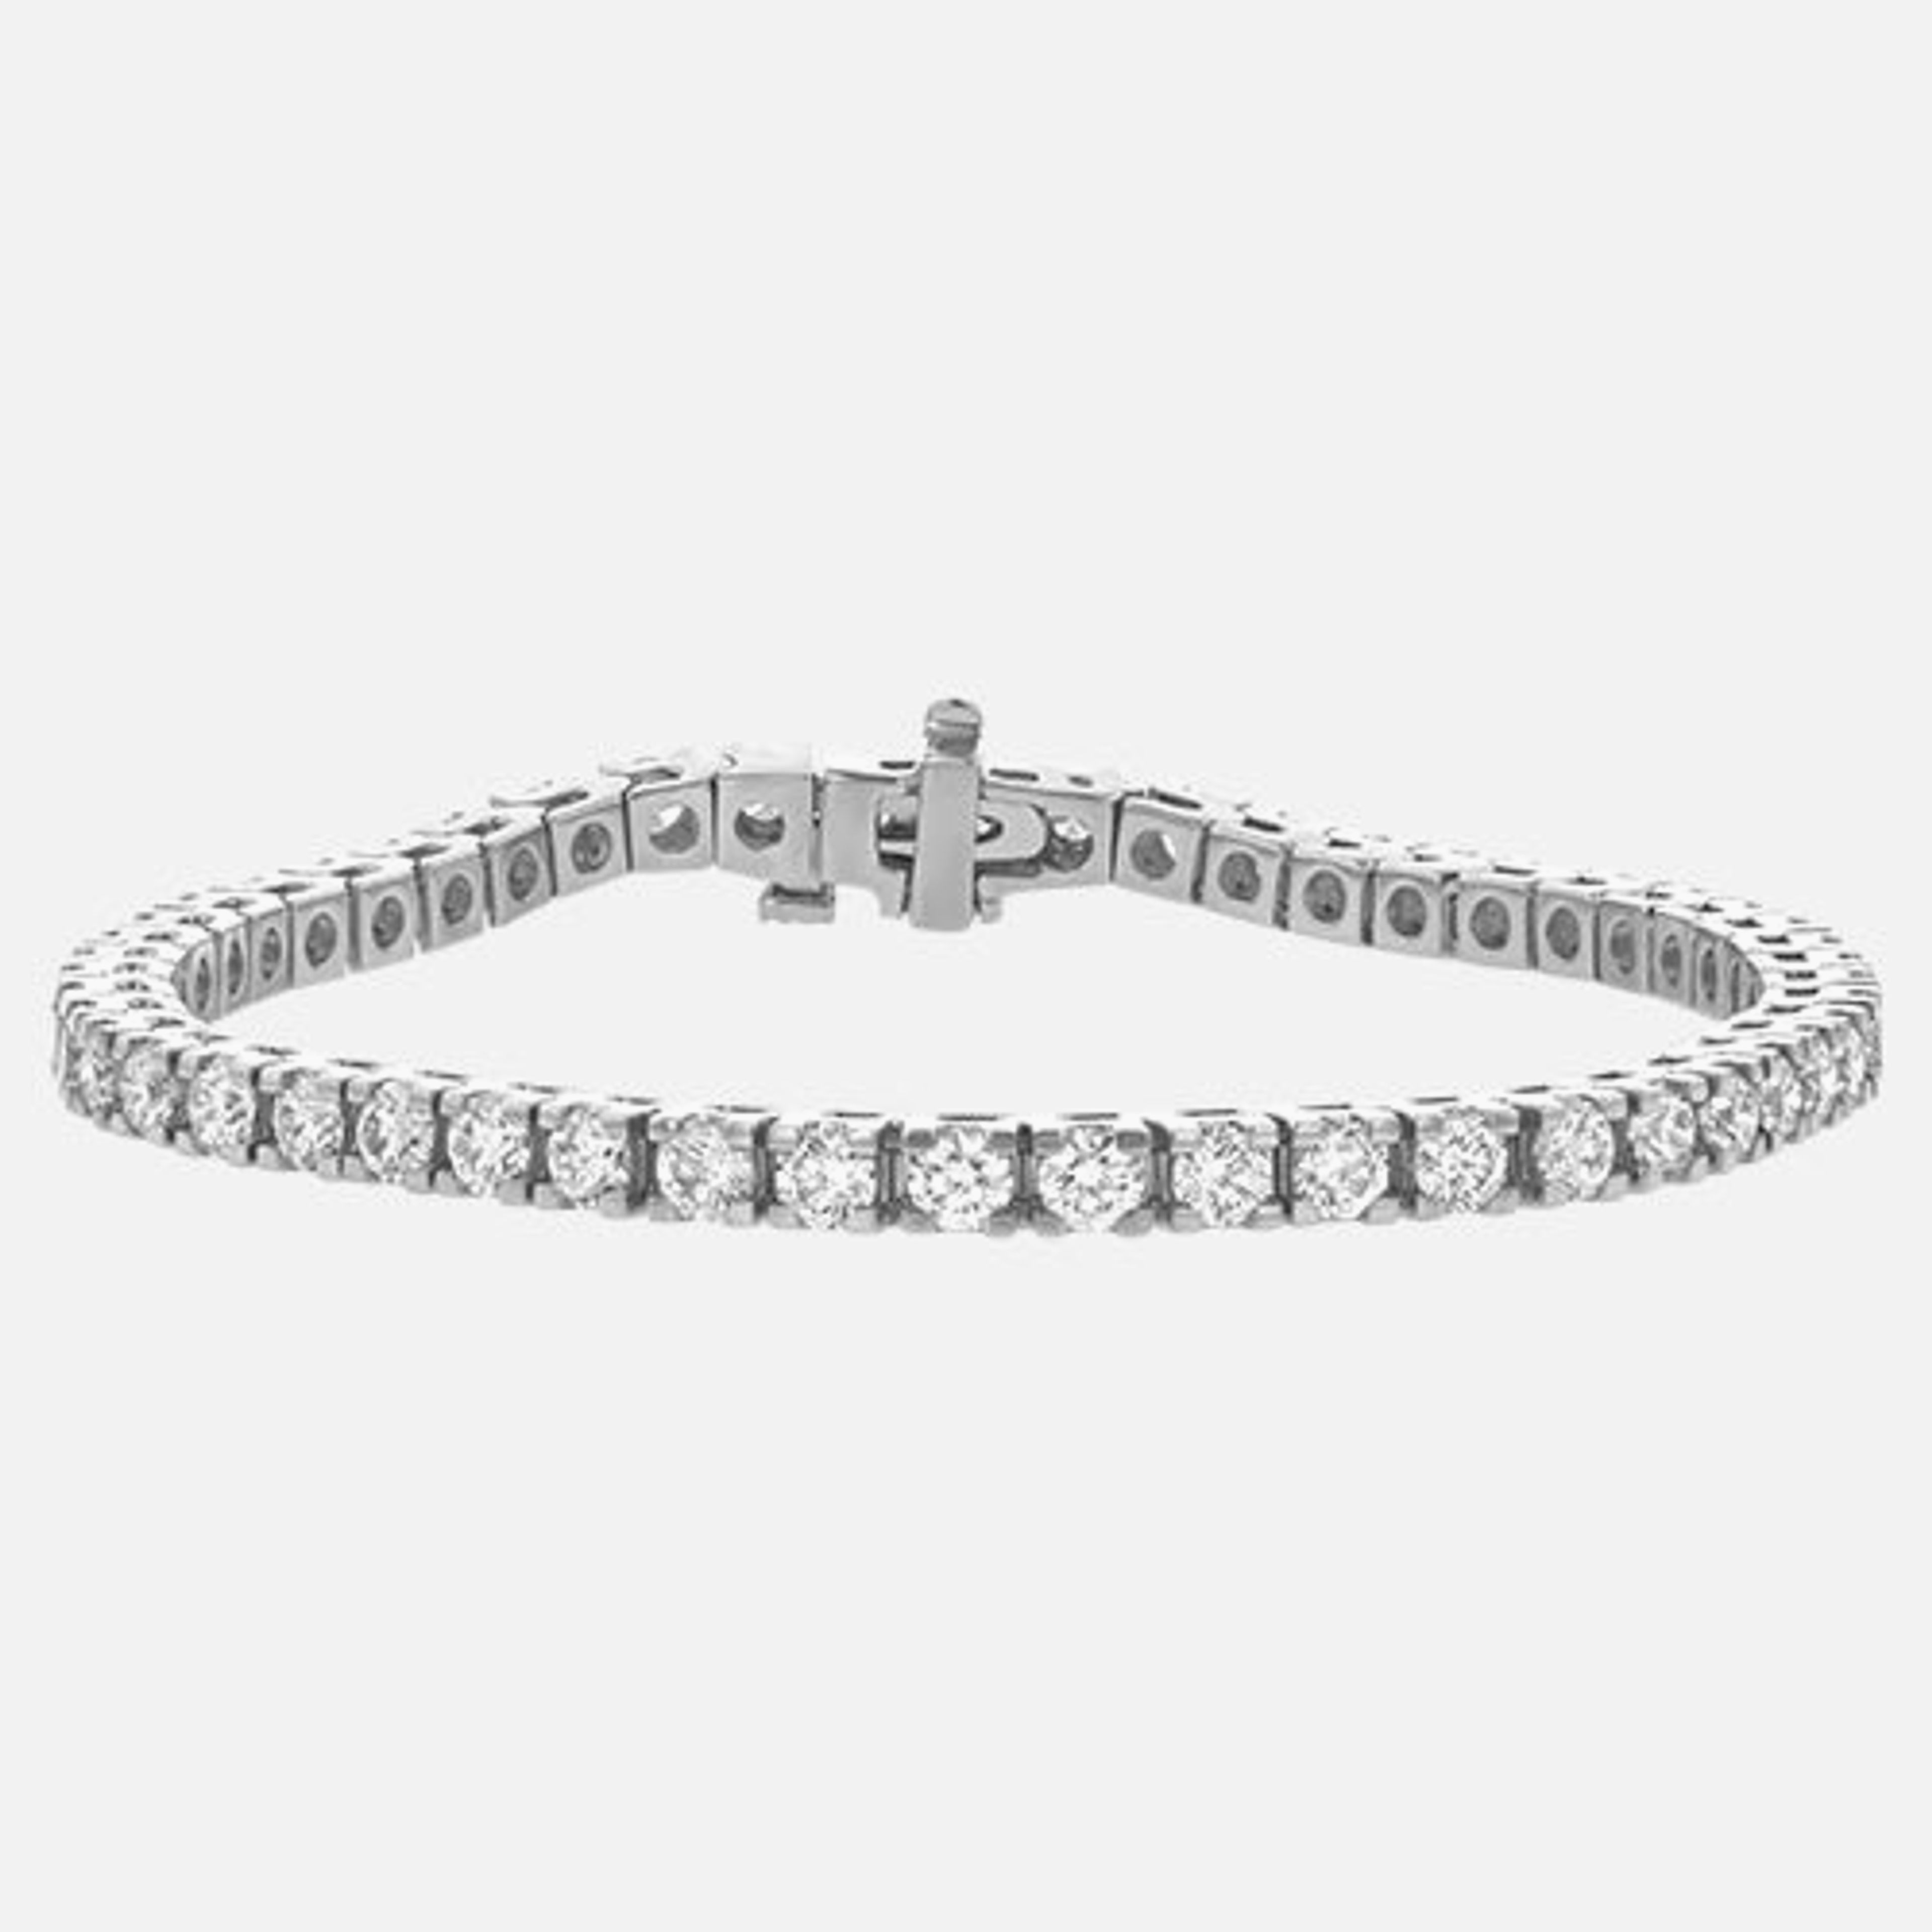 The 5 Carat Diamond Tennis Bracelet